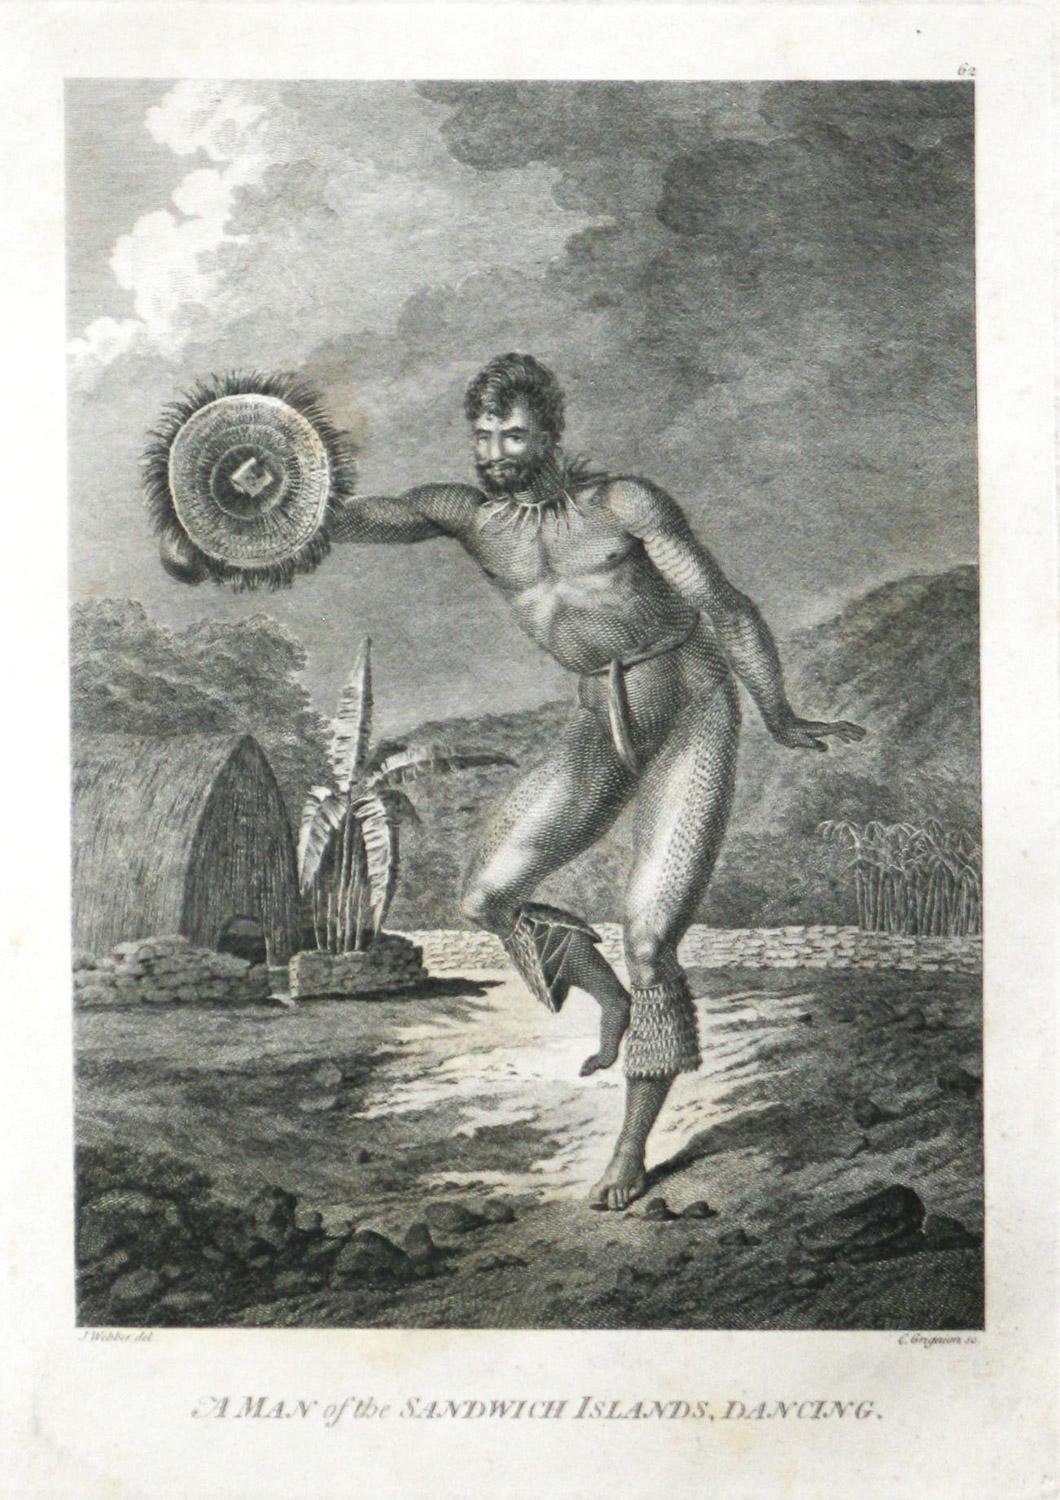 John Webber Figurative Print - A Man of the Sandwich Islands, Dancing (Hawaii) from Captain Cooks travels engra